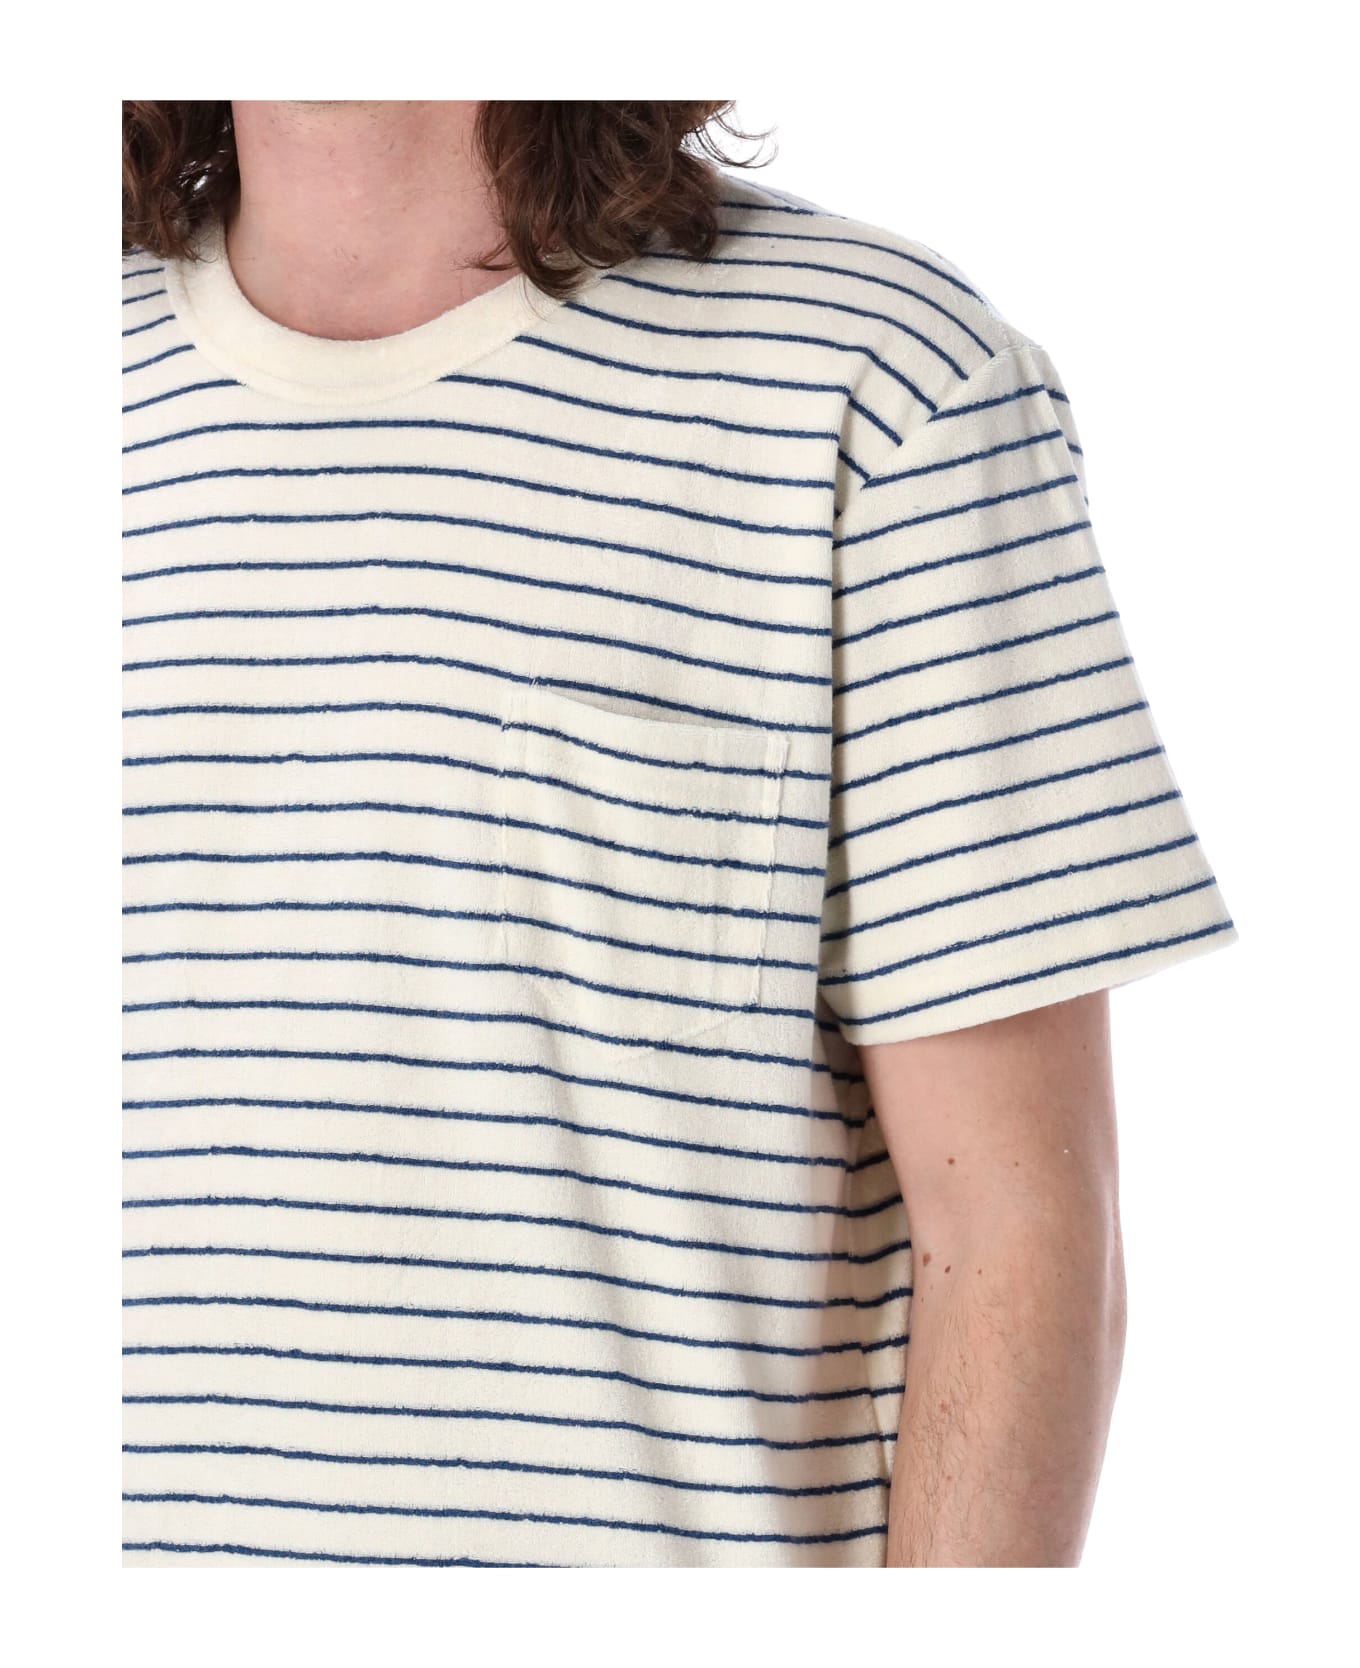 Howlin Striped T-shirt - BLU ISH シャツ